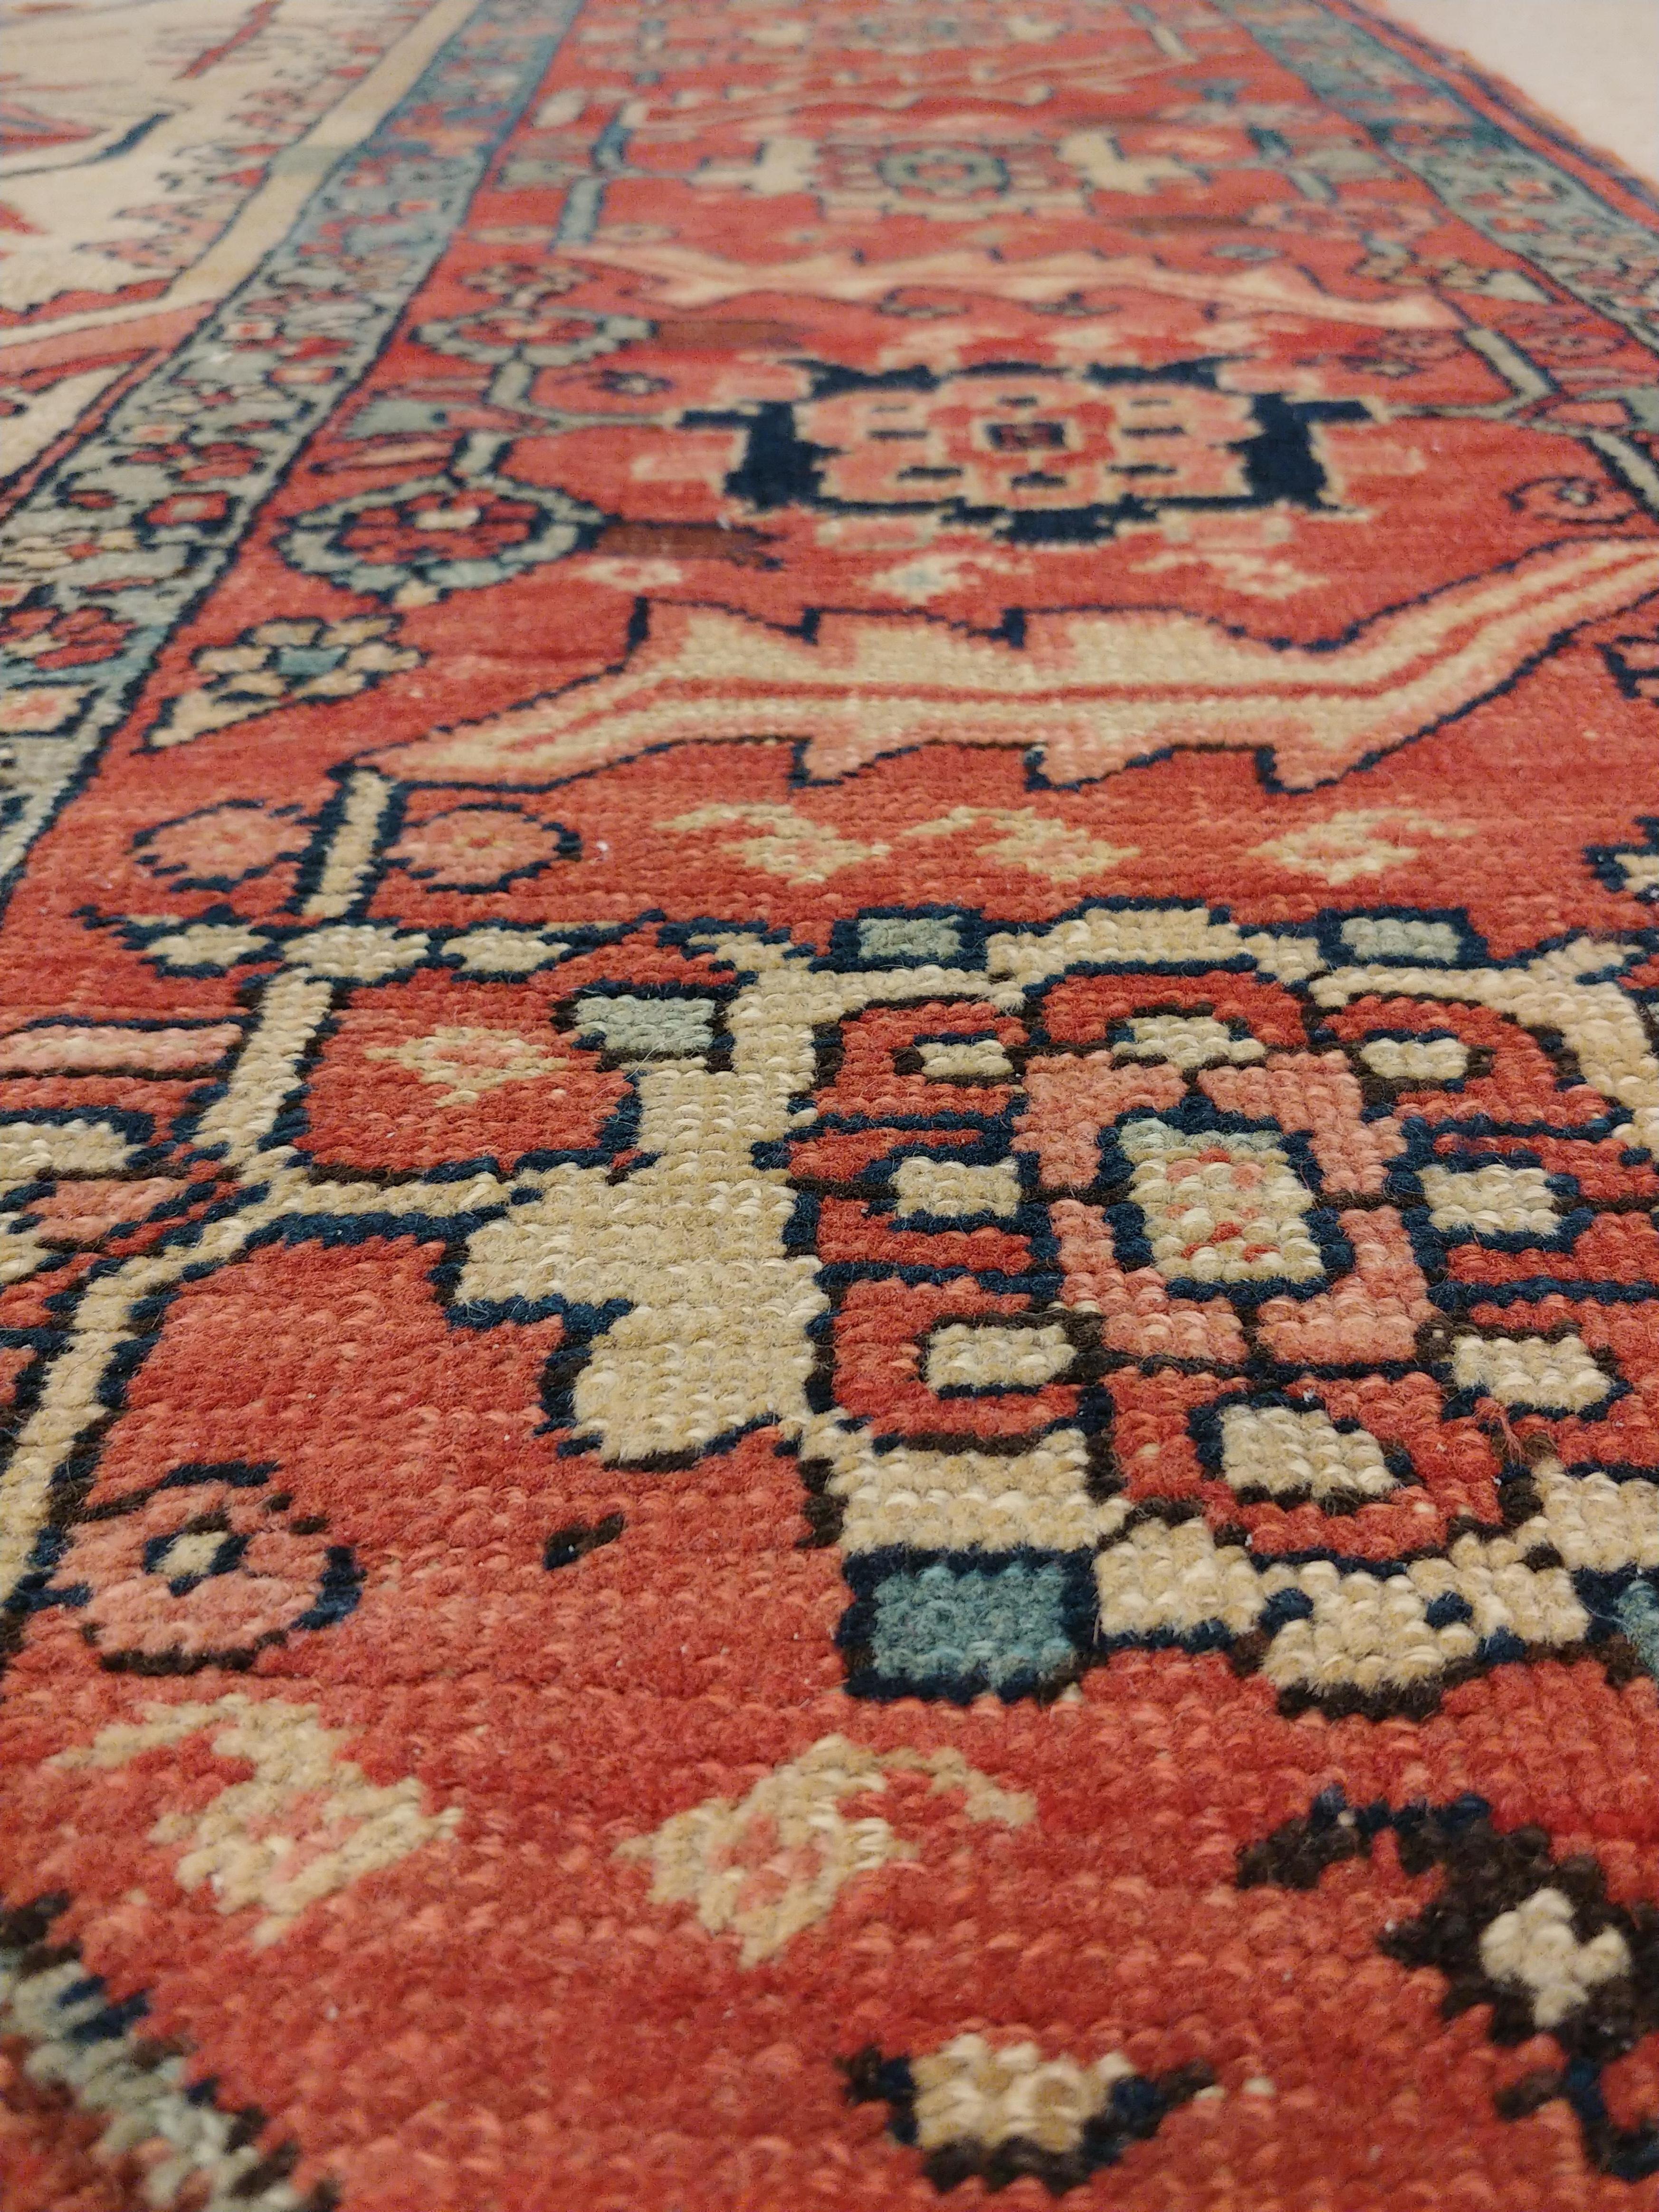 Antique Serapi Carpet, Handmade Wool Oriental Rug, Ivory, Rust, Navy, Light Blue For Sale 1